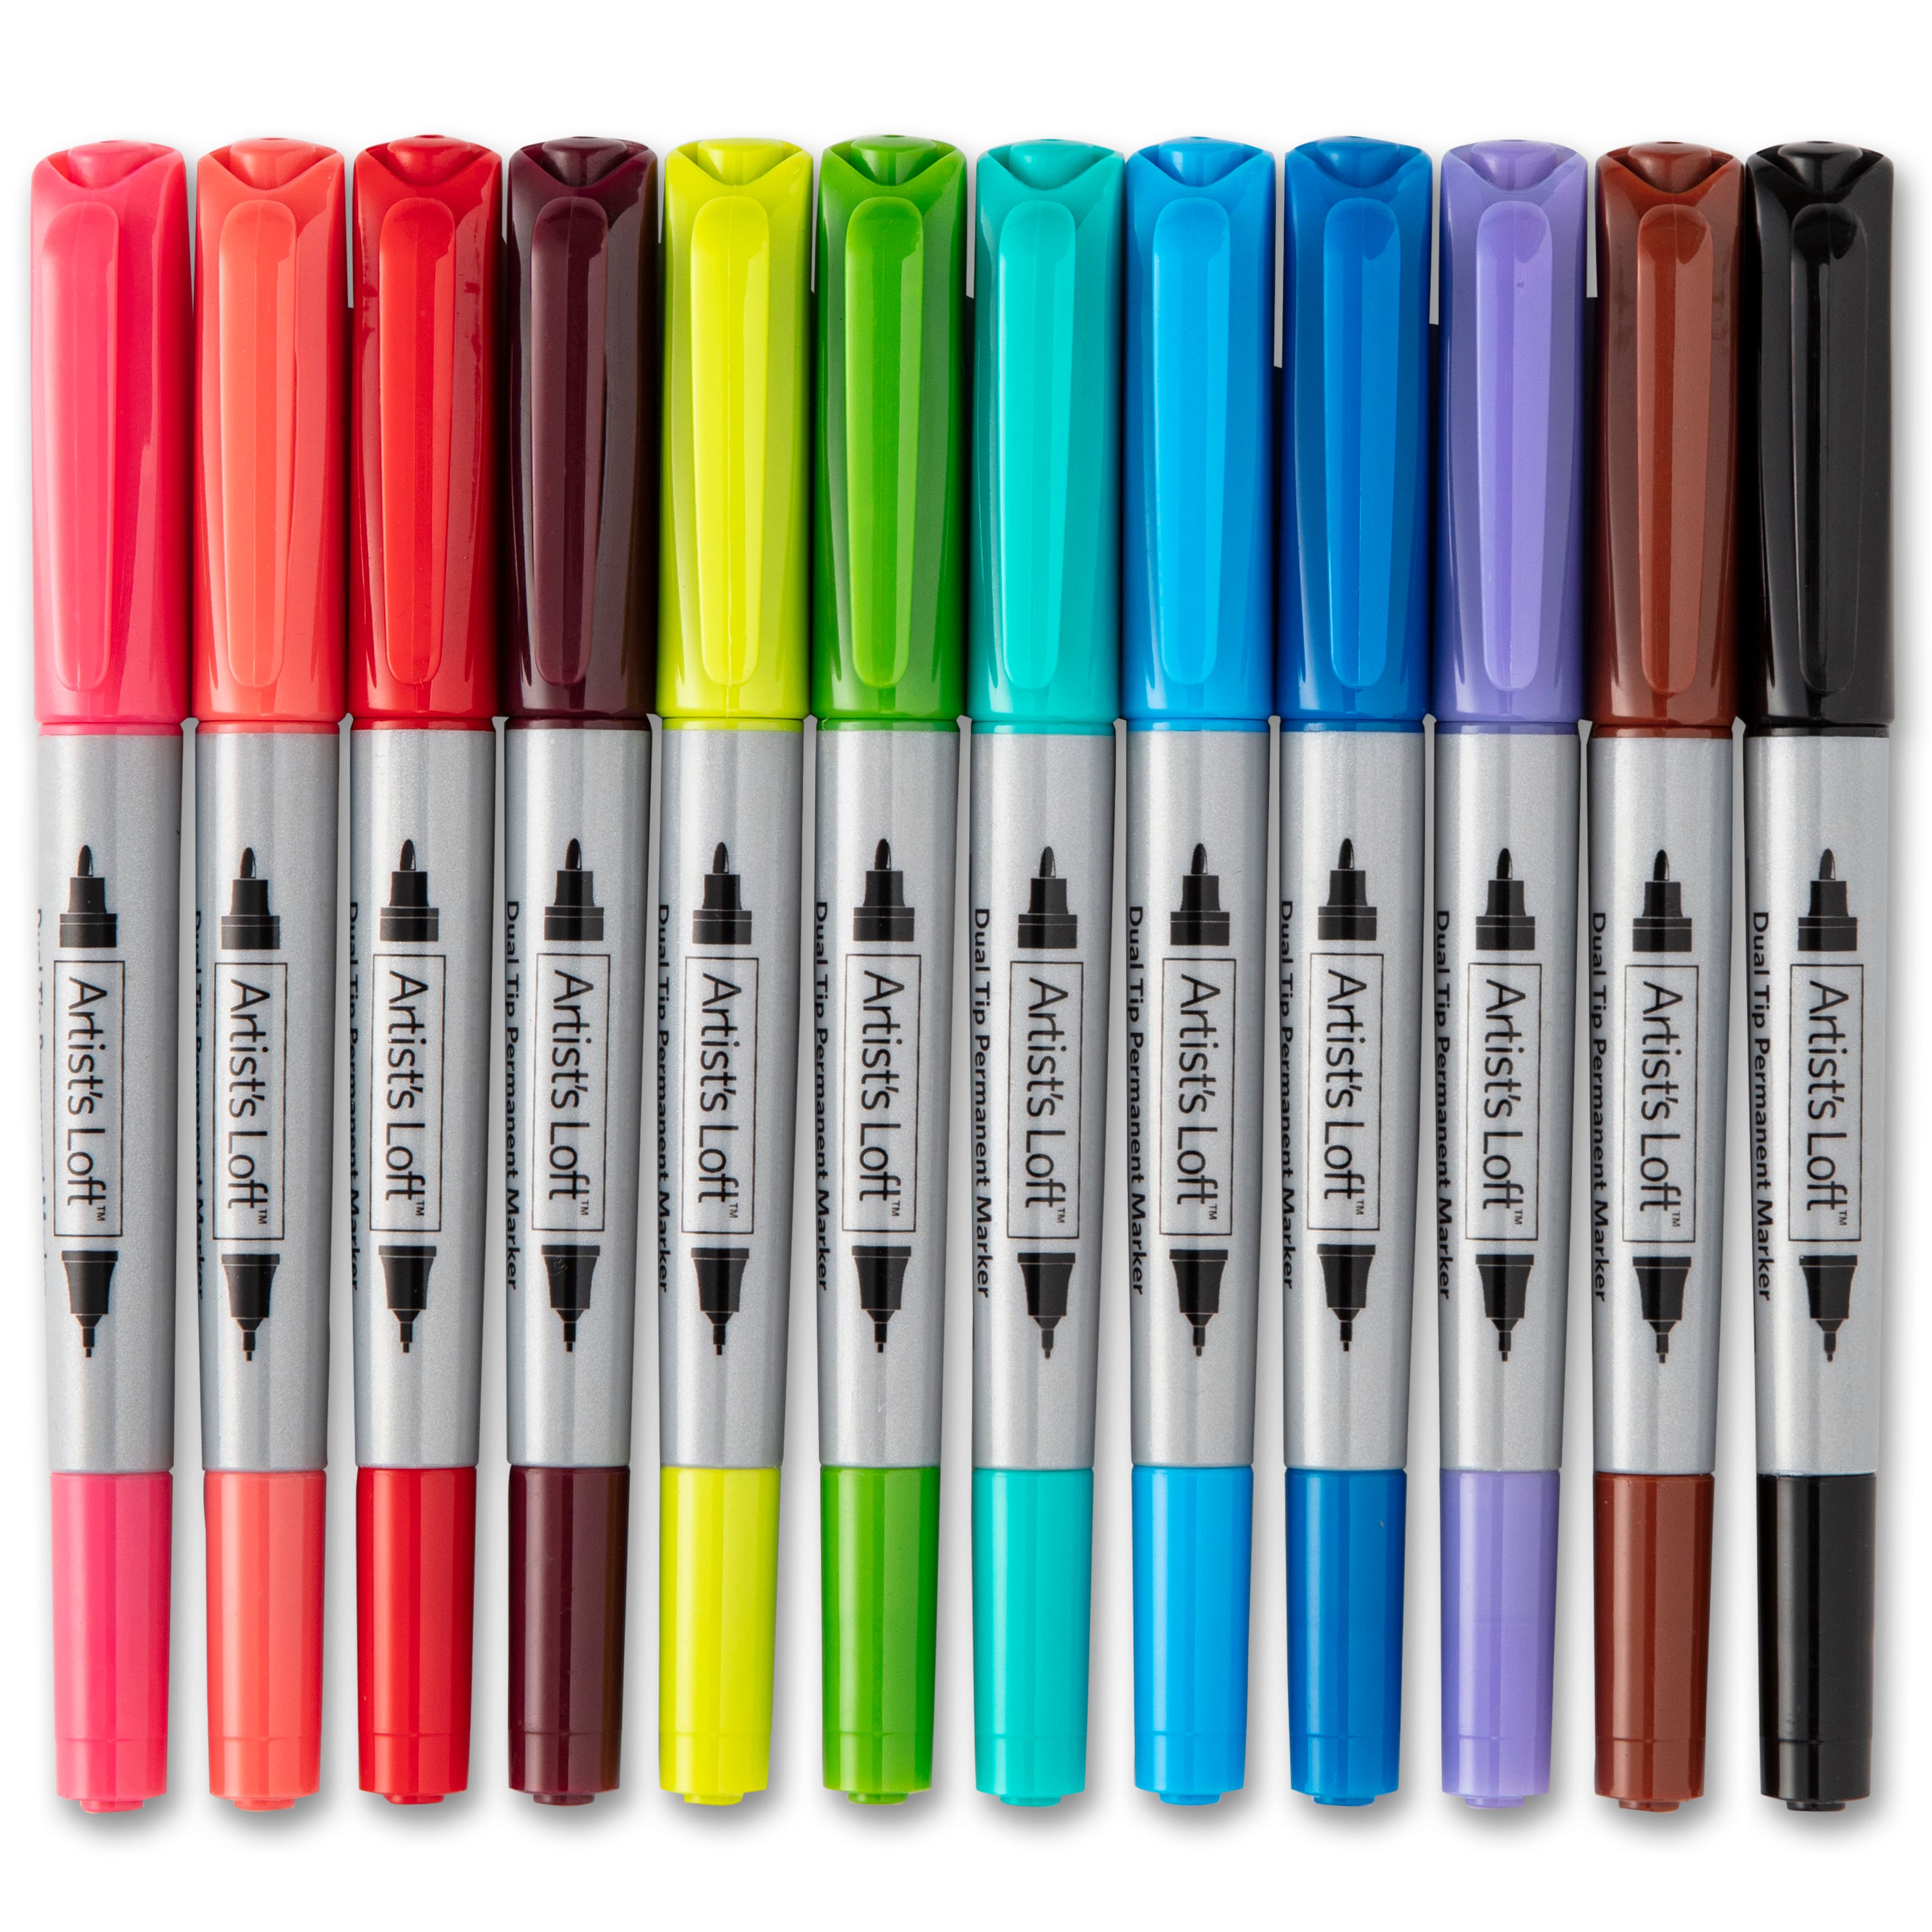 Dual Tip Marker Set (24-Colors)